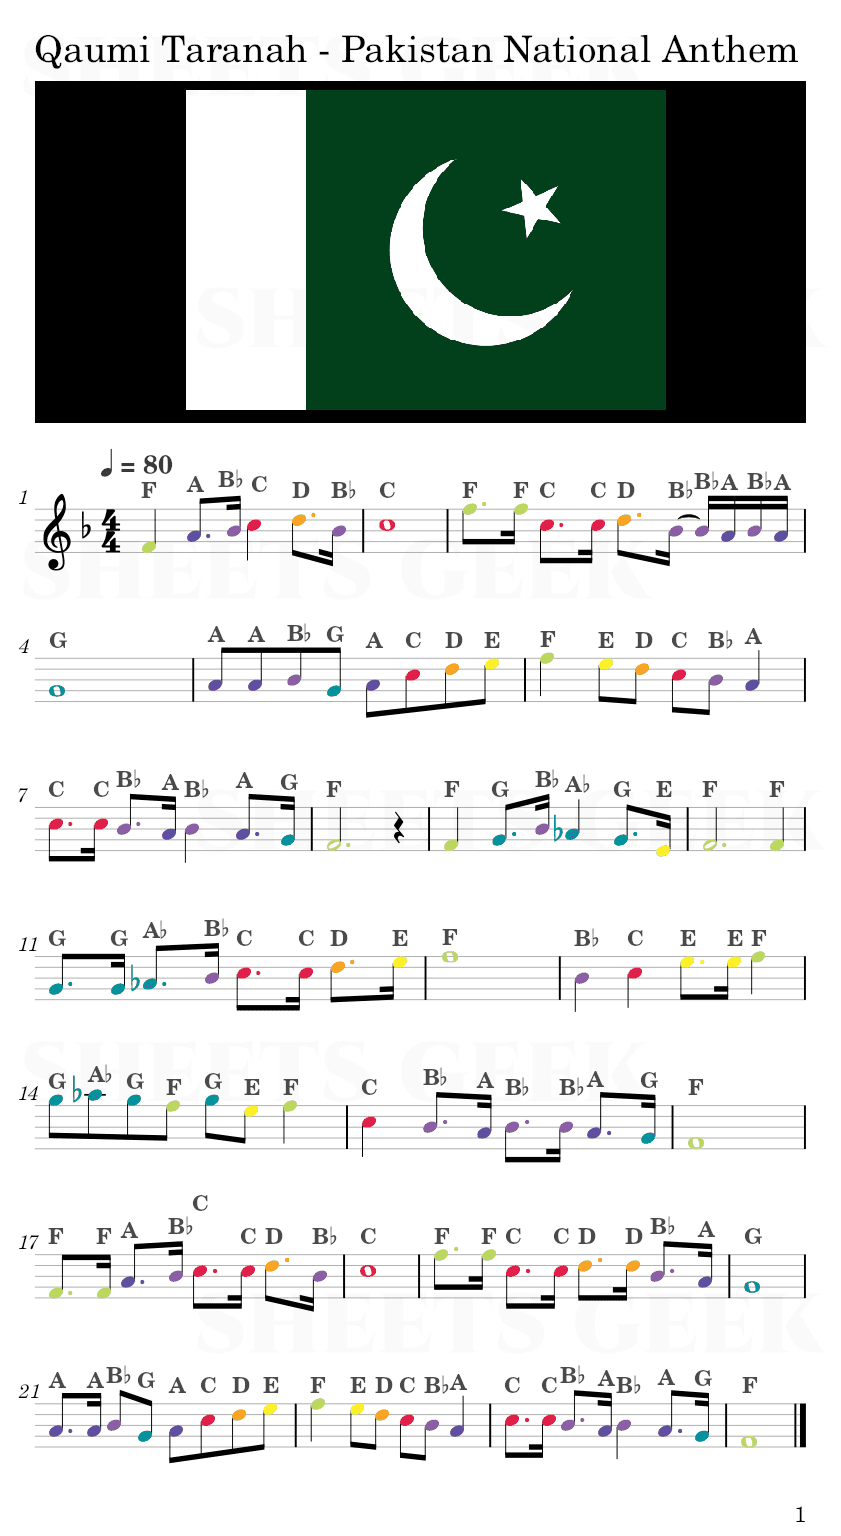 Qaumi Taranah - Pakistan National Anthem Easy Sheet Music Free for piano, keyboard, flute, violin, sax, cello page 1